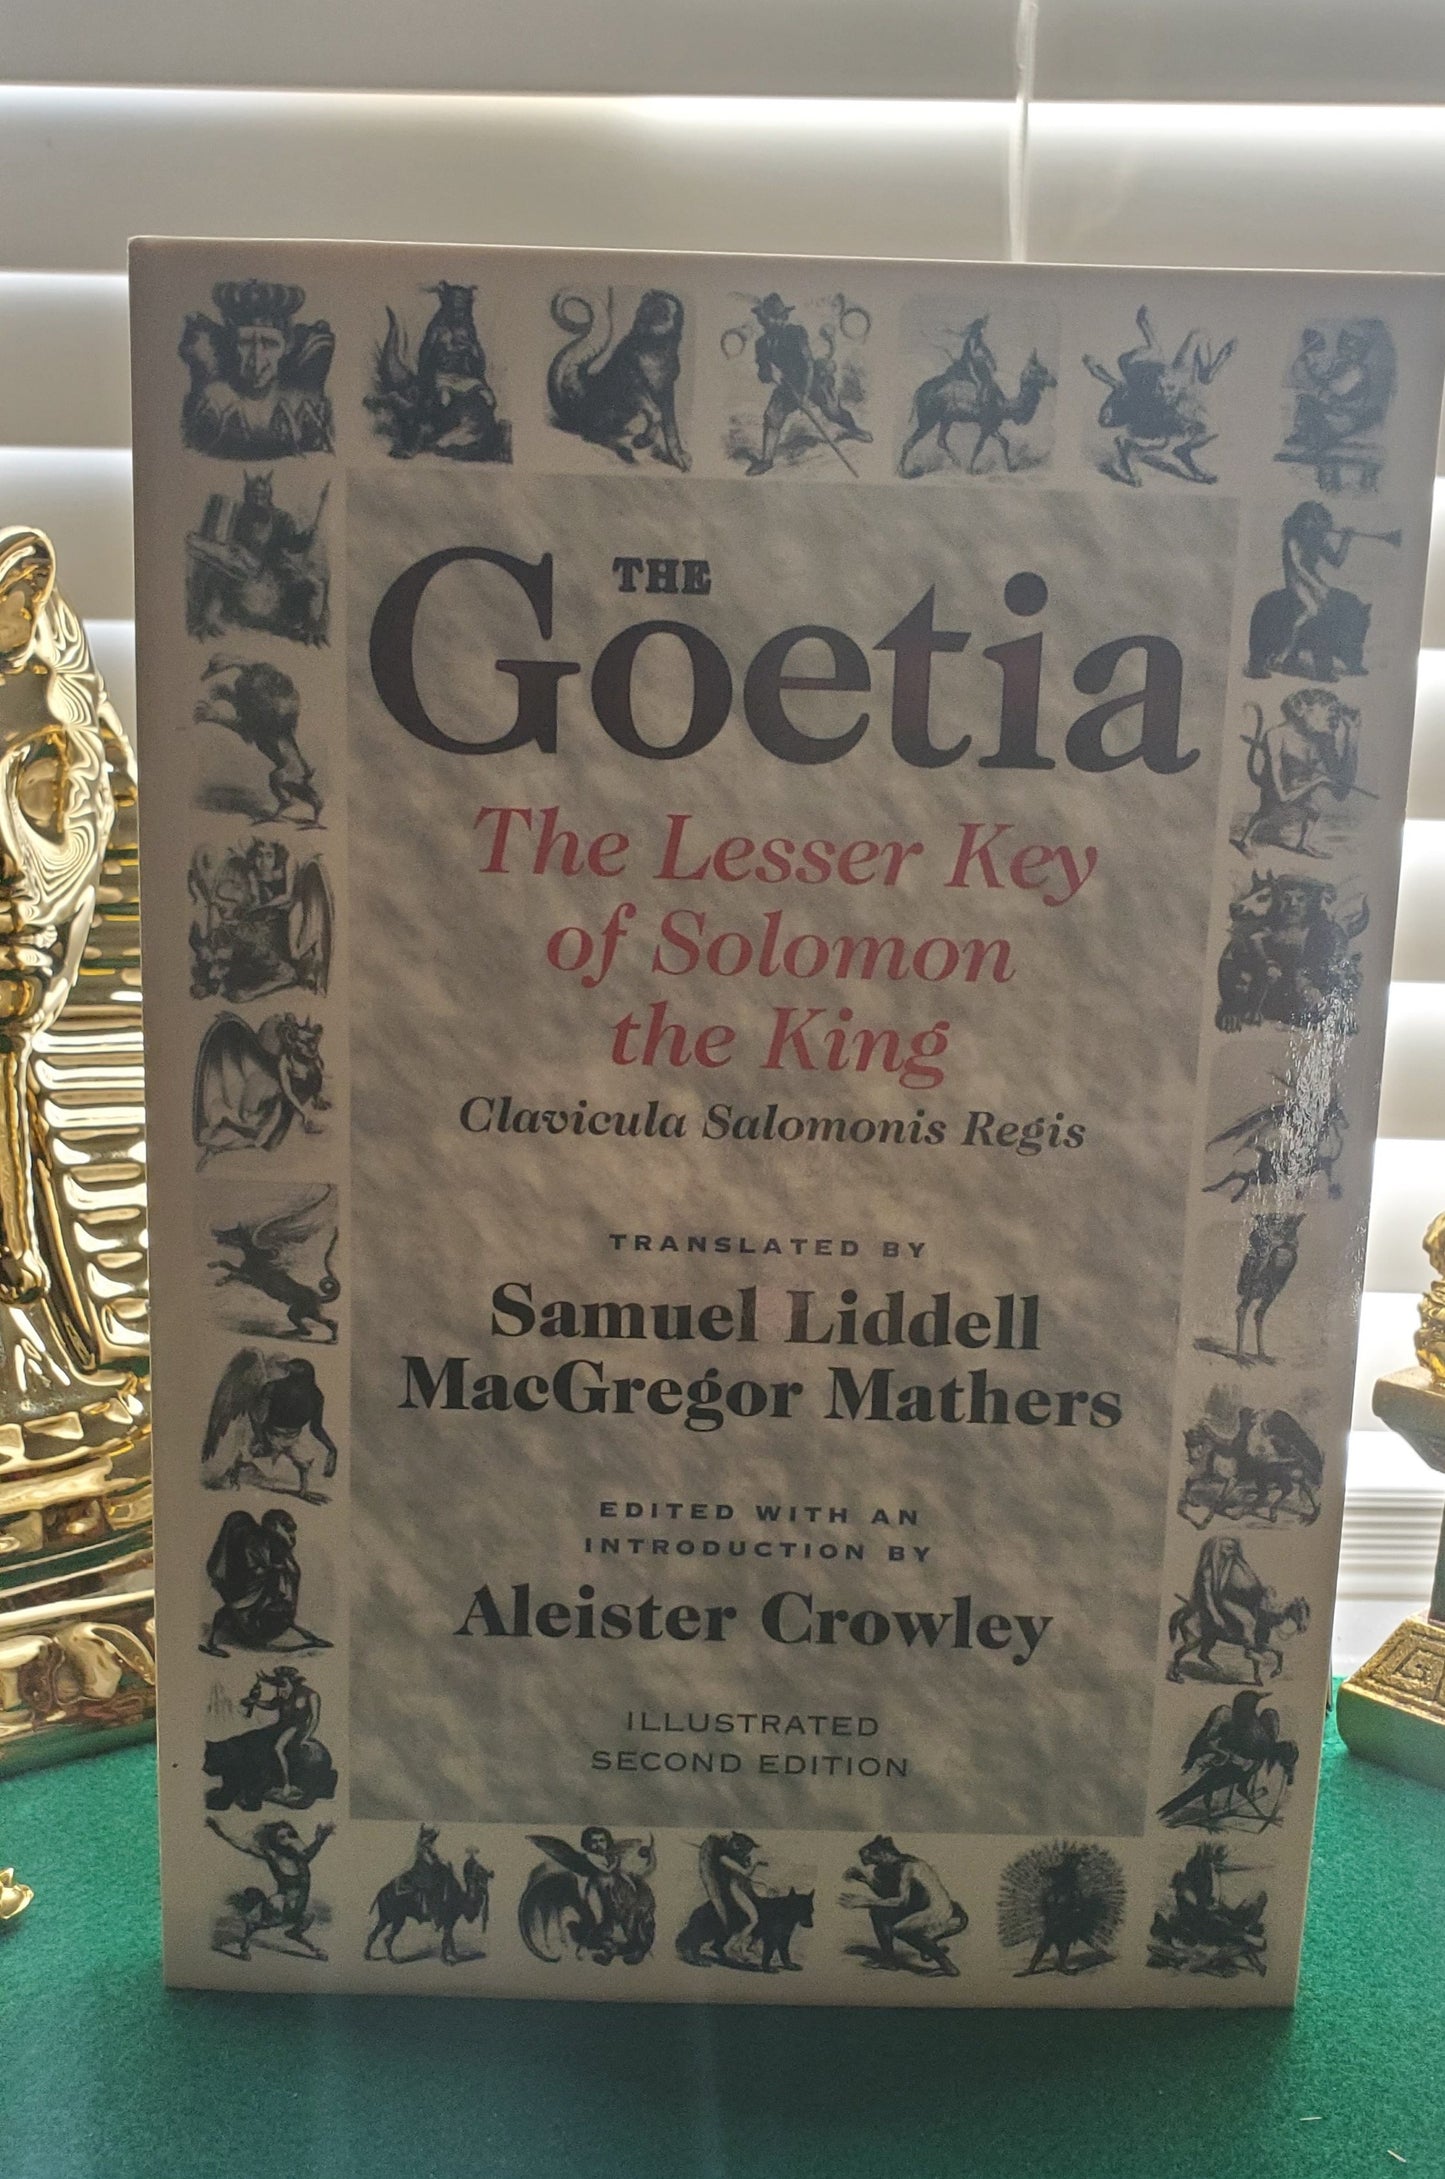 The Goetia: The Lesser Key of Solomon The King Clavicula Salomonis Regis #Magick #AleisterCrowley #Goetia #HighMagick #SpiritCommunications